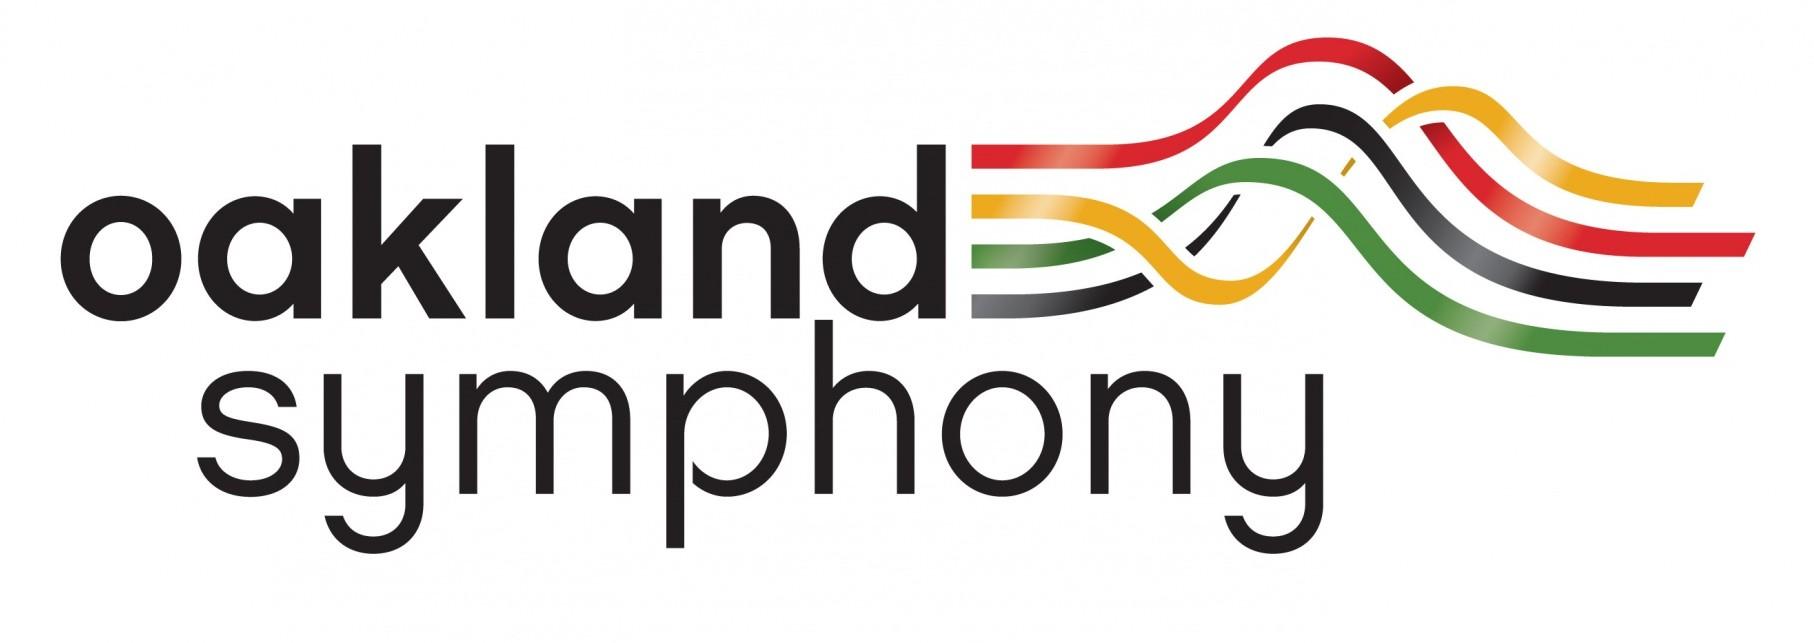 Symphony Logo - Oakland Symphony Logos